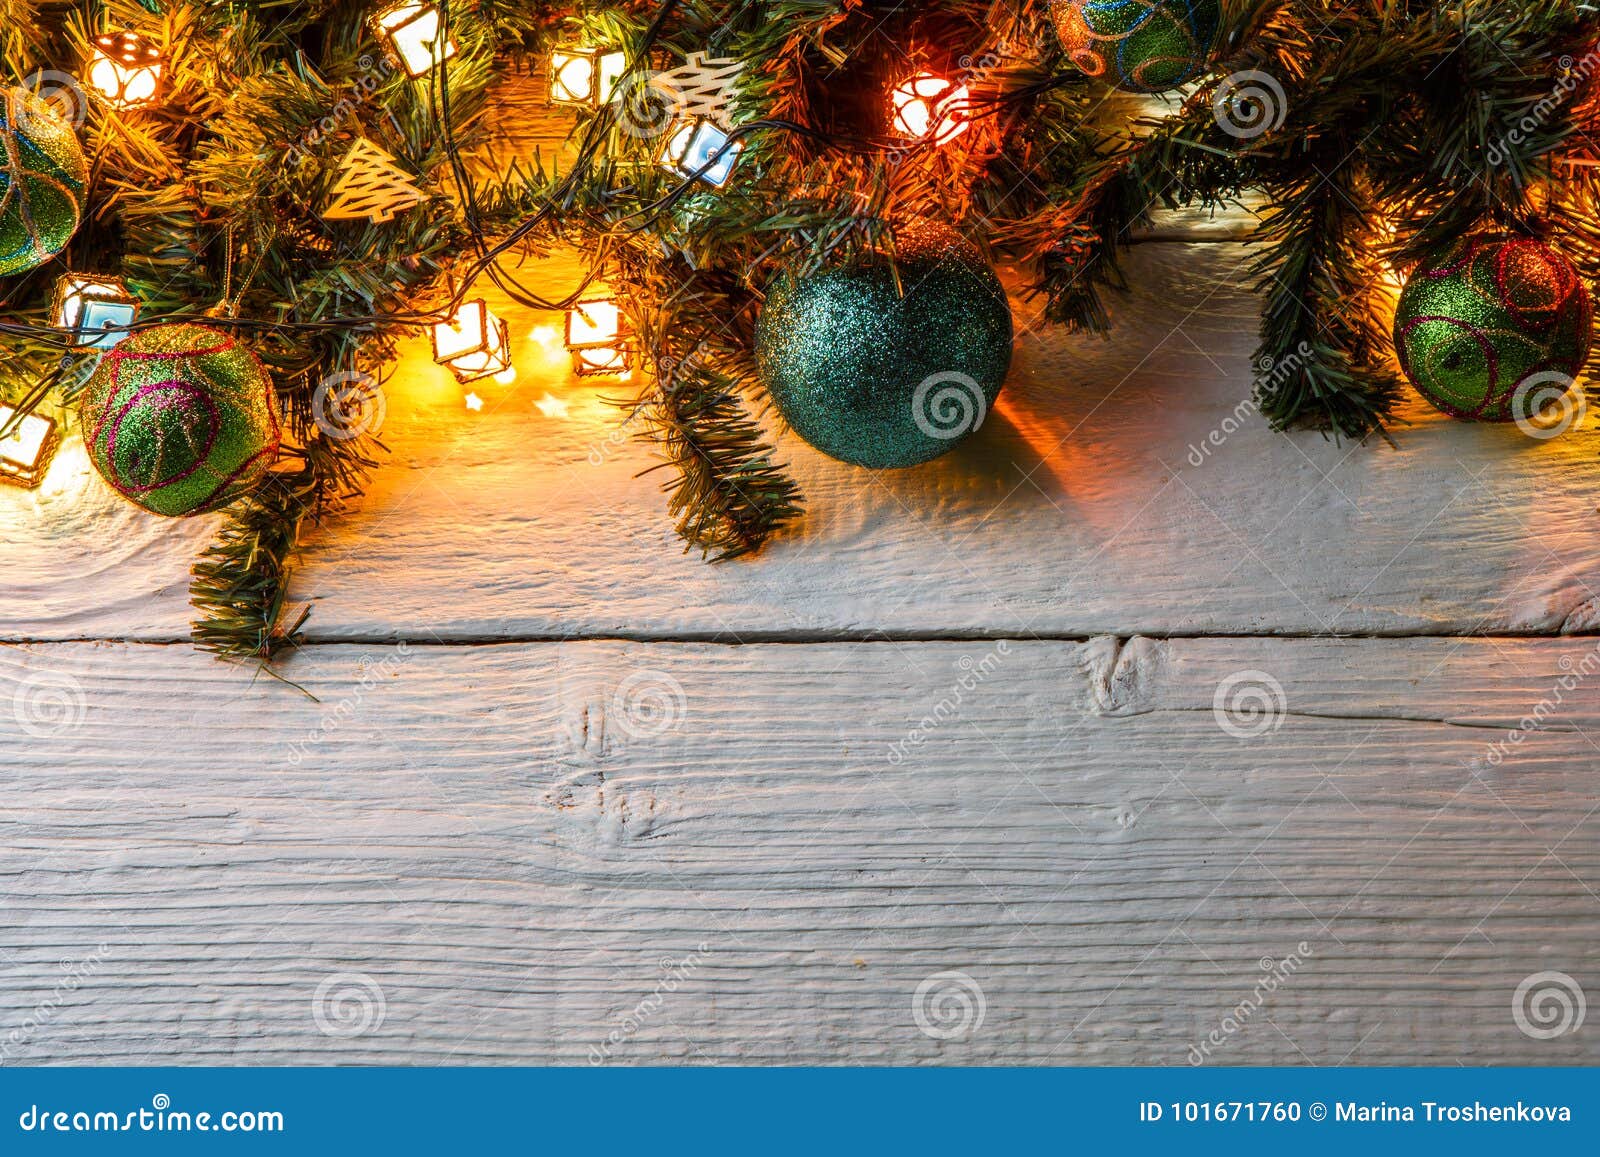 Photo of Fir Branches, Christmas Balls, Burning Garland Stock Photo ...